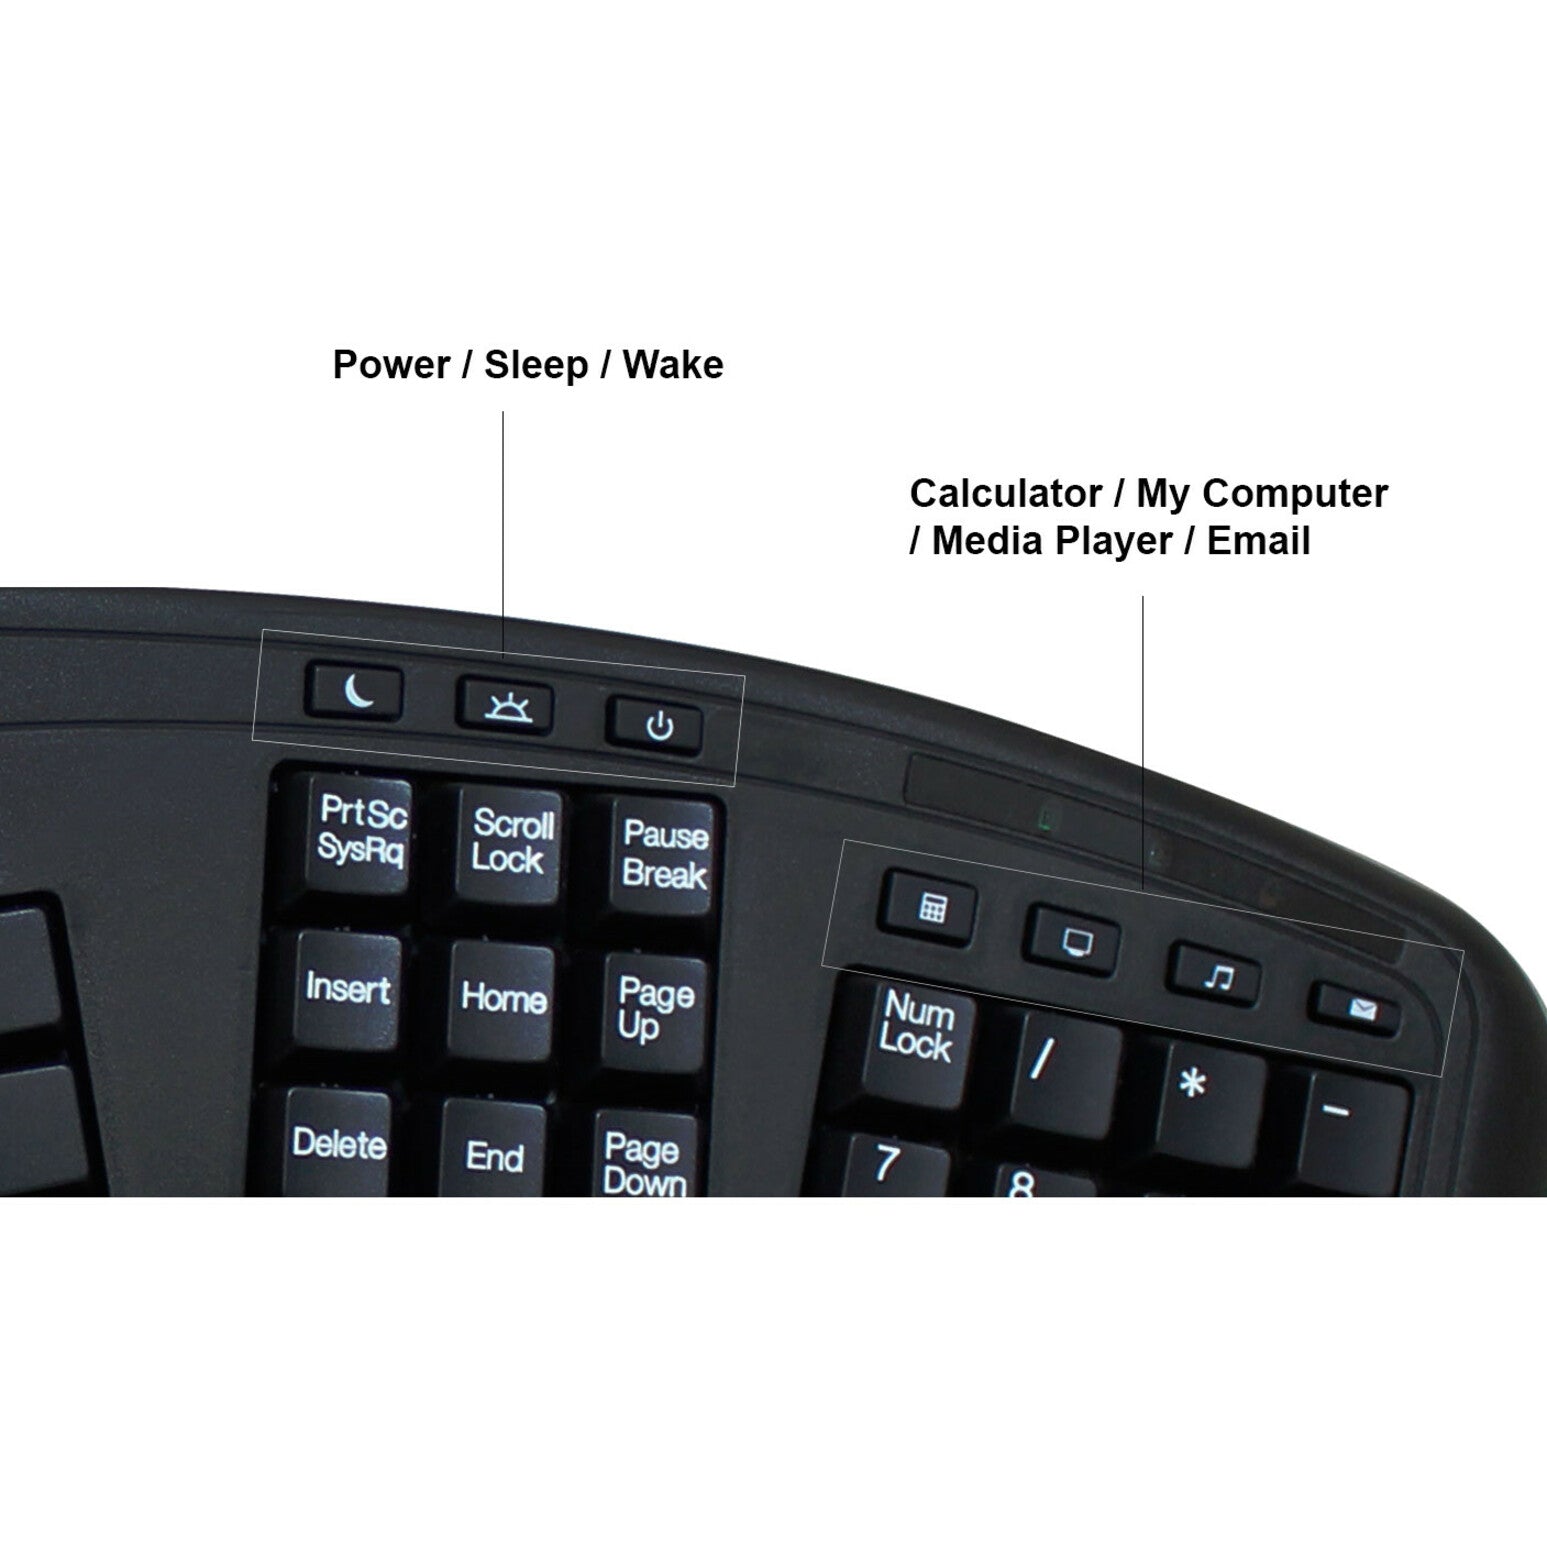 Adesso AKB-450UB Tru-Form Ergonomic Touchpad Keyboard, Split Layout, Quiet Keys, Palm Rest, Ergonomic Design